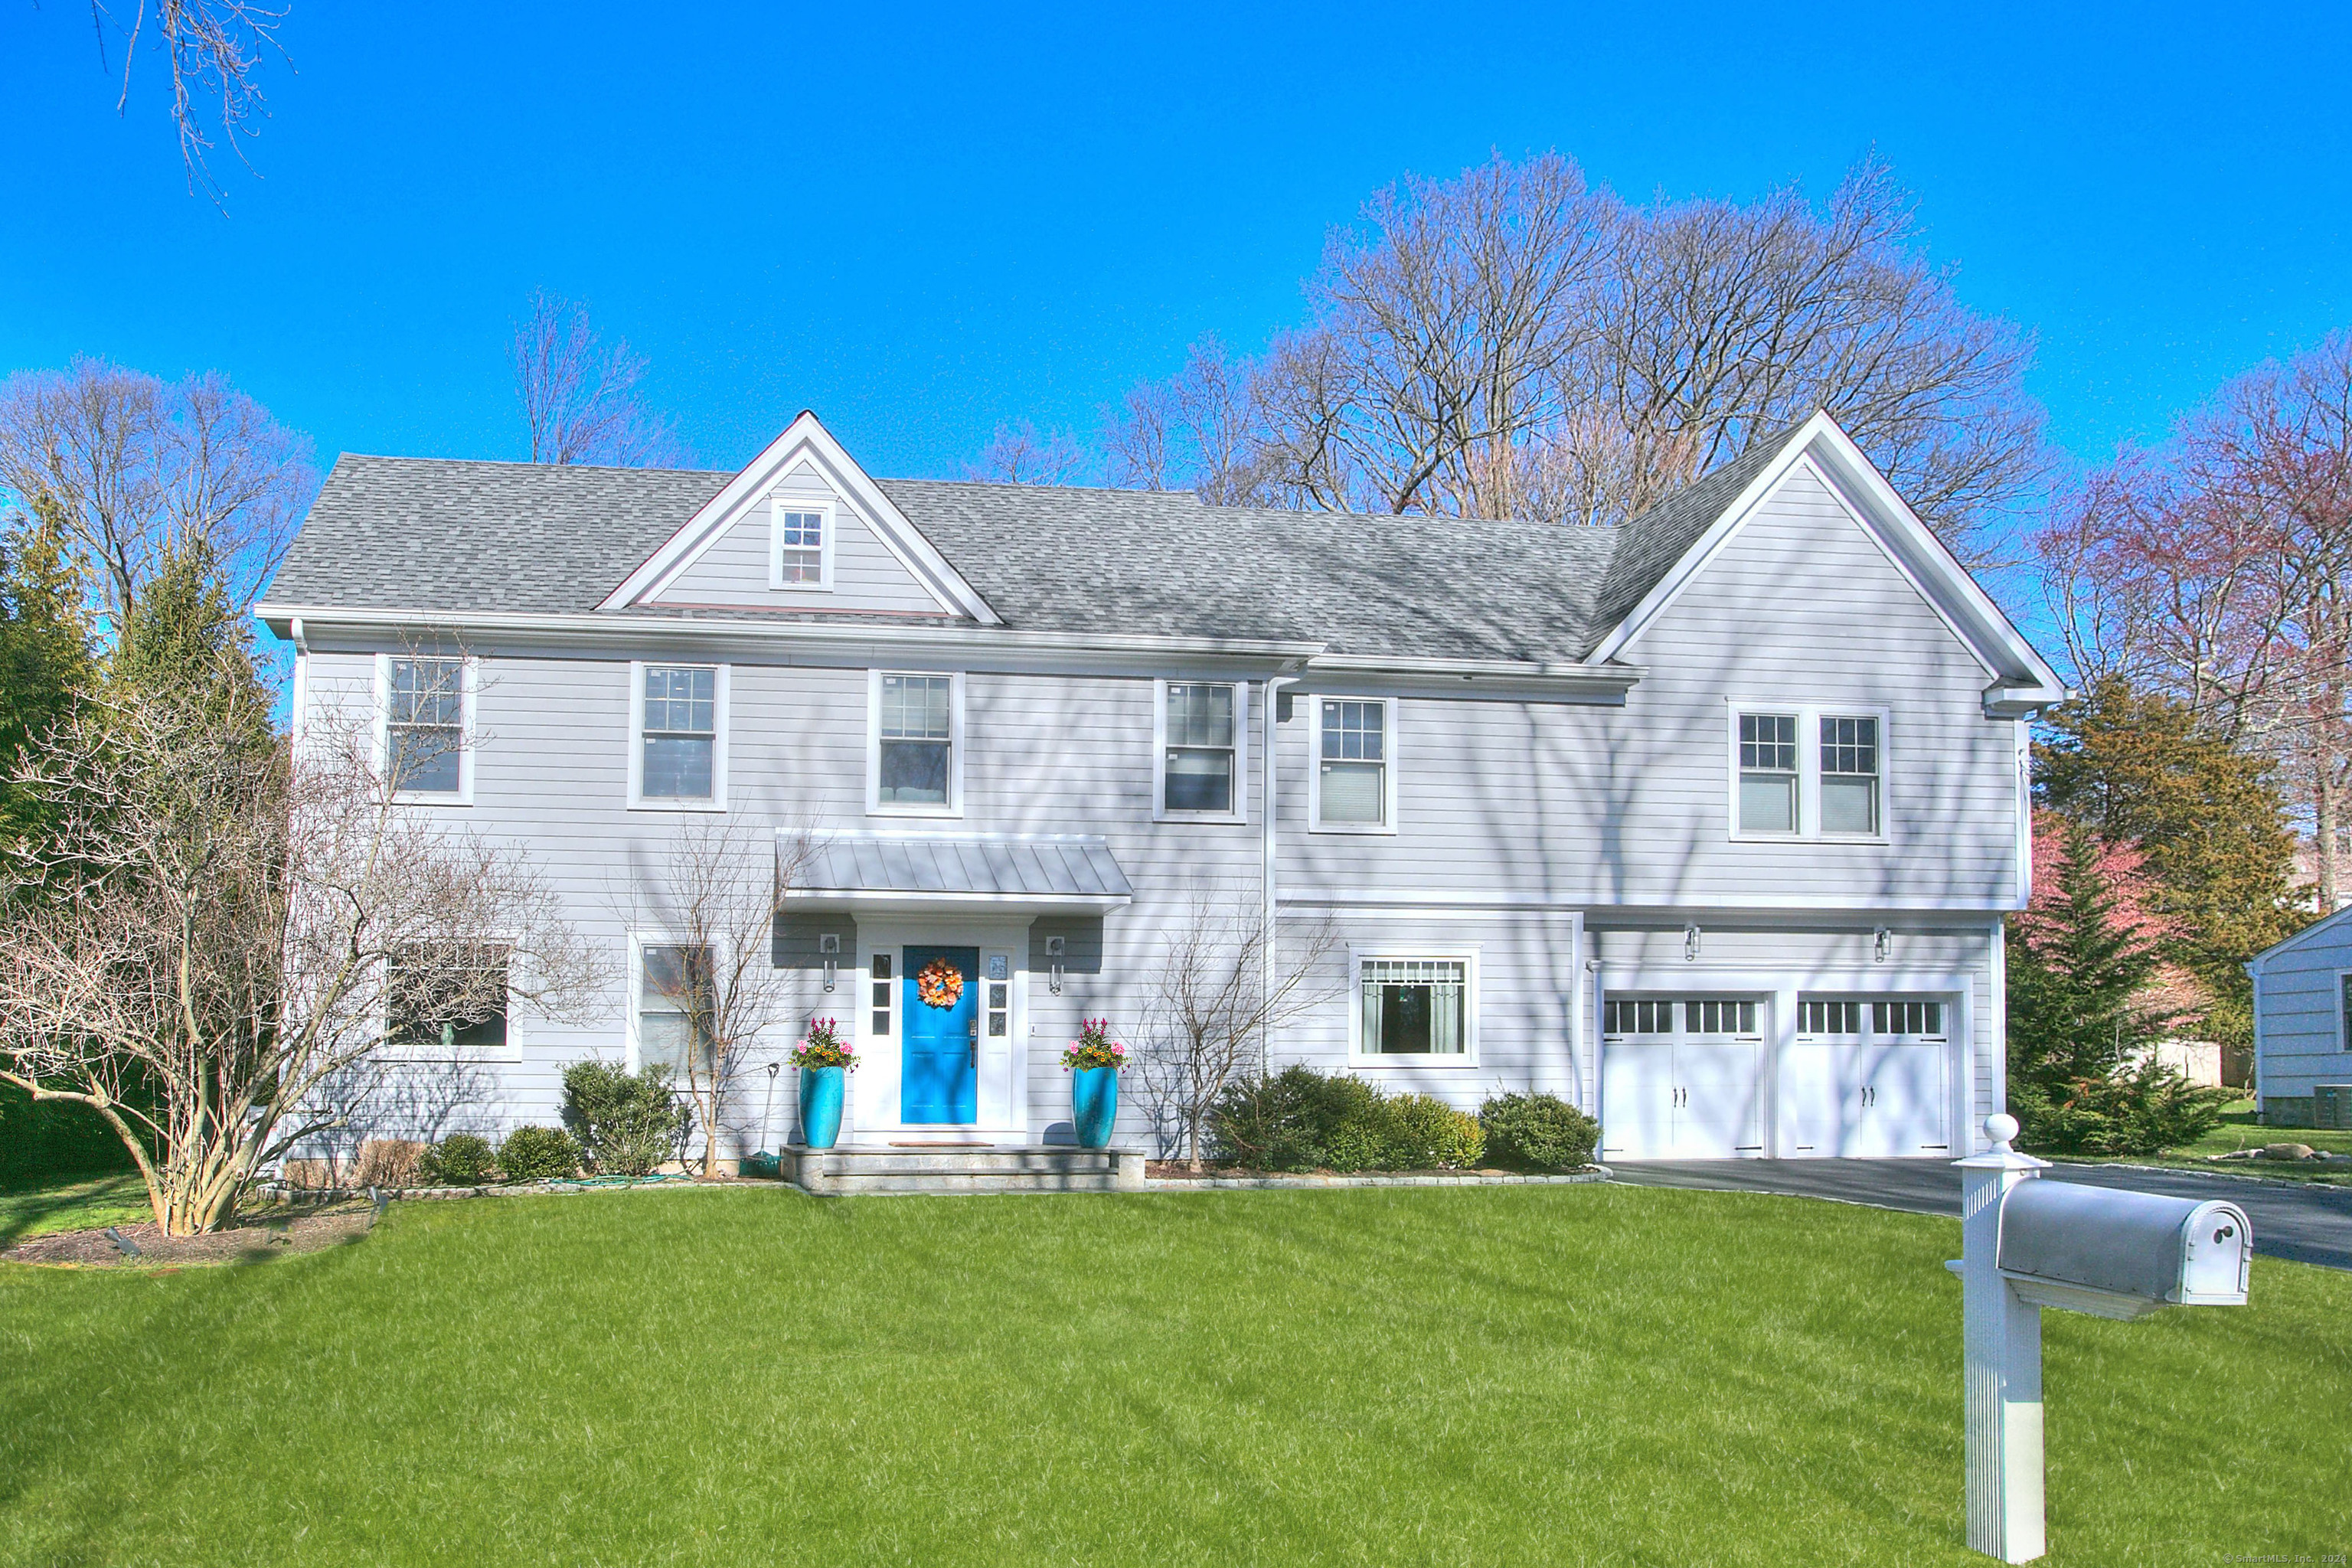 Rental Property at 16 Sue Terrace, Westport, Connecticut - Bedrooms: 4 
Bathrooms: 3 
Rooms: 9  - $12,500 MO.